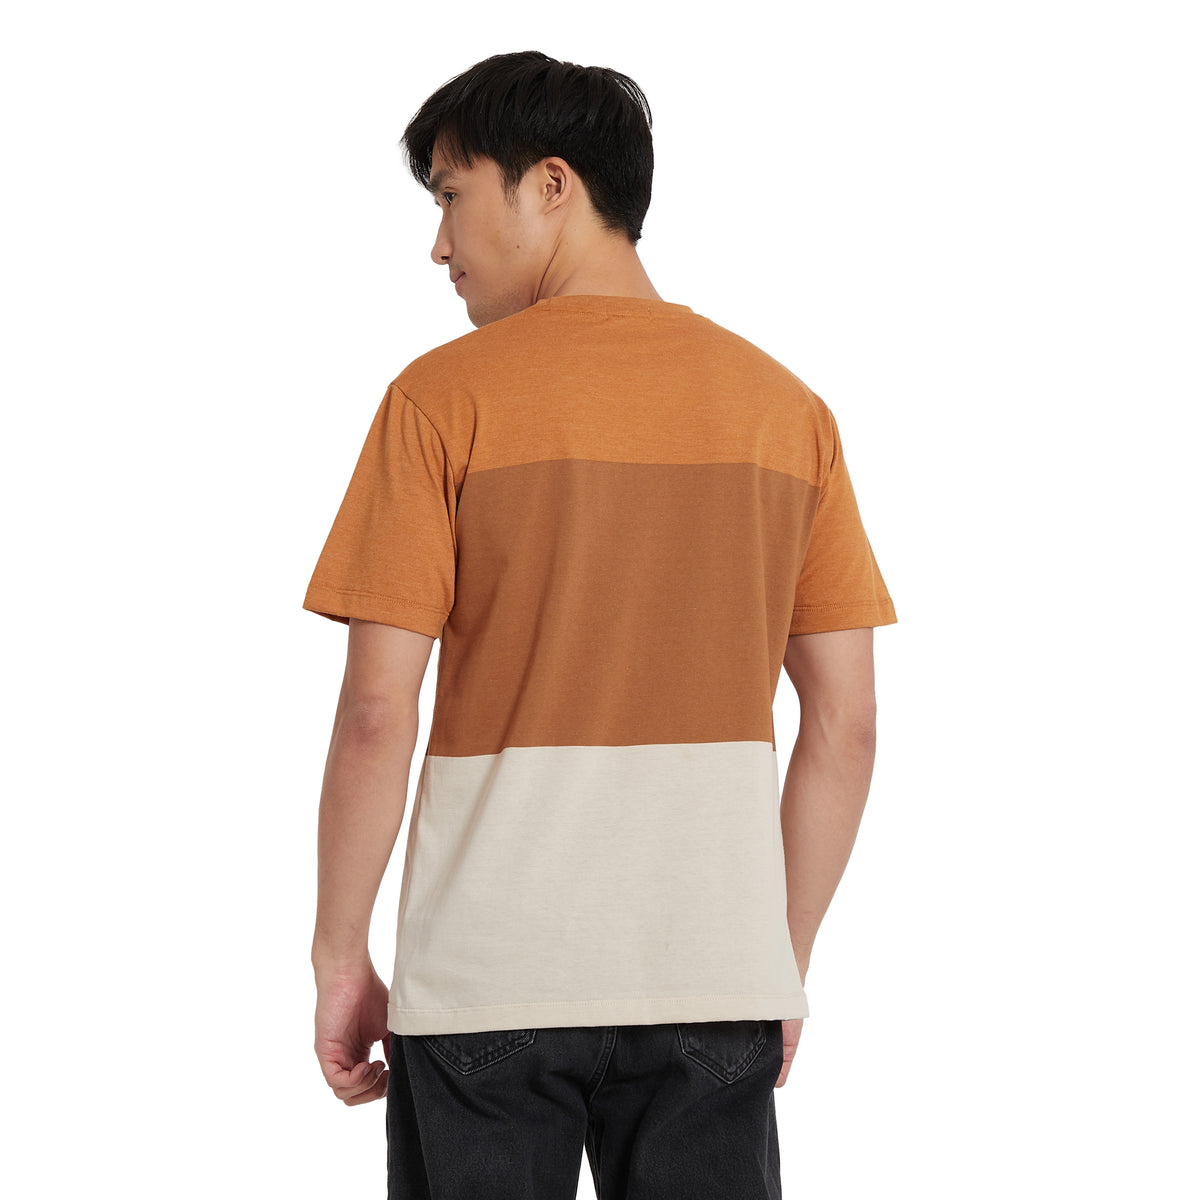 Cubic Men Round Neck Tees T-shirt Stripes Shirt Top Top for Men - CMS2329R